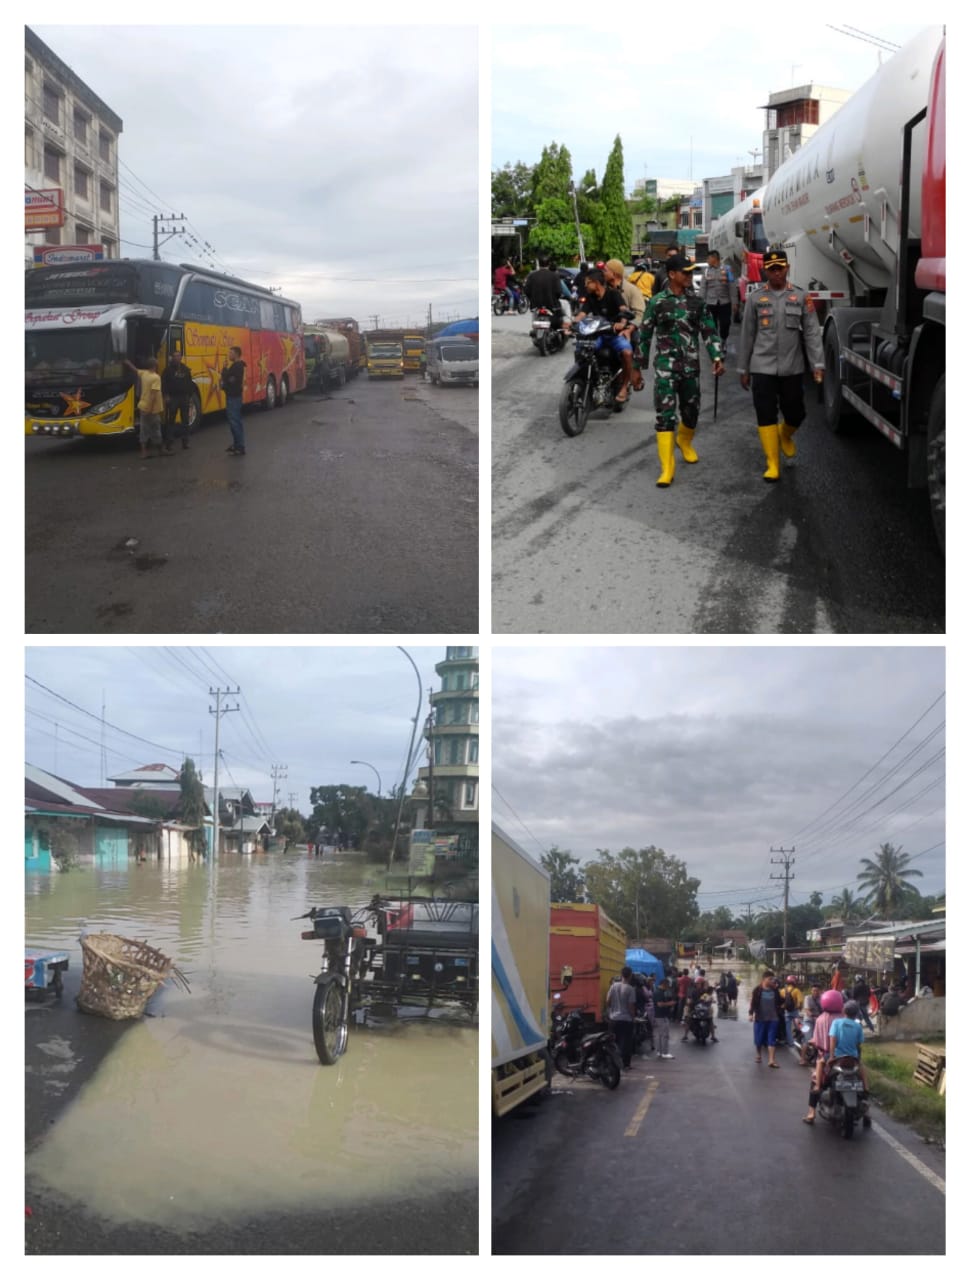 Antrian kenderaan truk dan mobil pribadi dari arah Kualasimpang, Aceh yang terjebak banjir dan tidak dapat melintas menuju Sumatera Utara dikarenakan air banjir menggenangi badan jalan dikawasan Bukit Rata, Kejuruan Muda.beritasore/ist